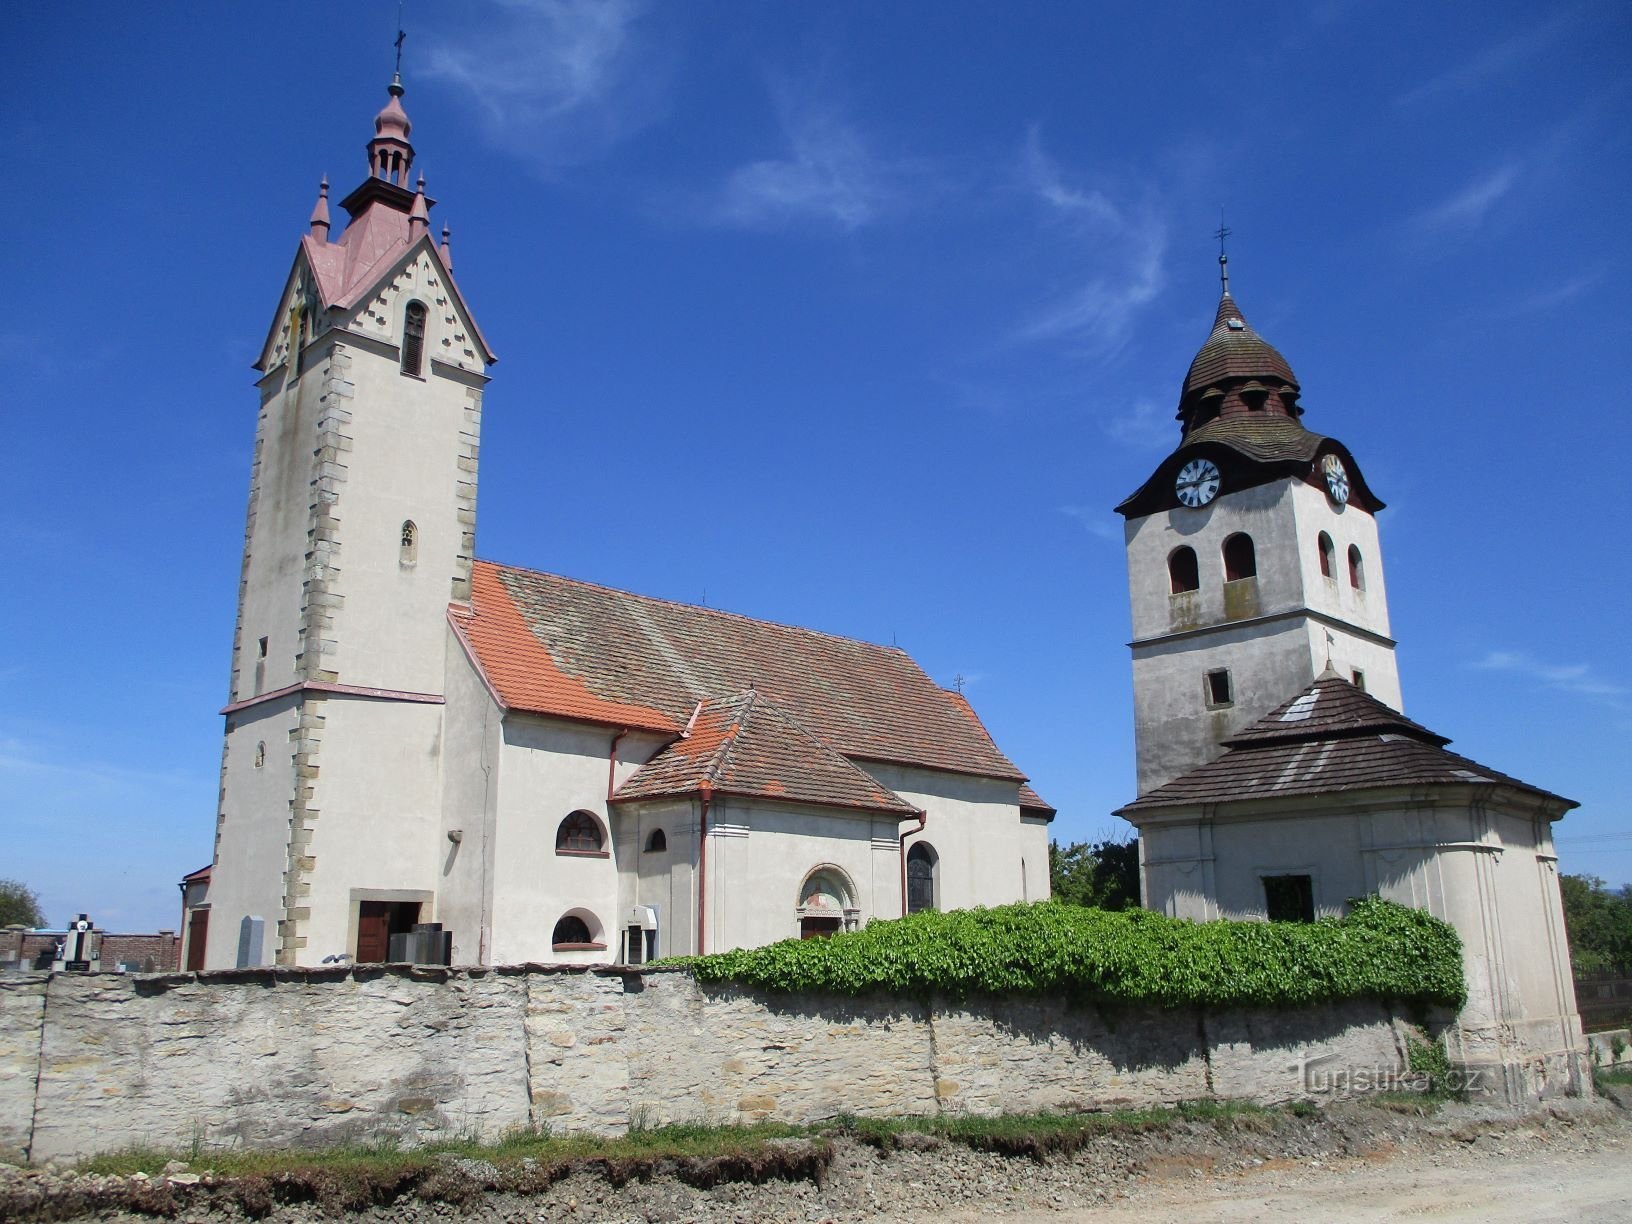 Chiesa di S. Nicola con il campanile (Bohuslavice nad Metují, 18.5.2020/XNUMX/XNUMX)